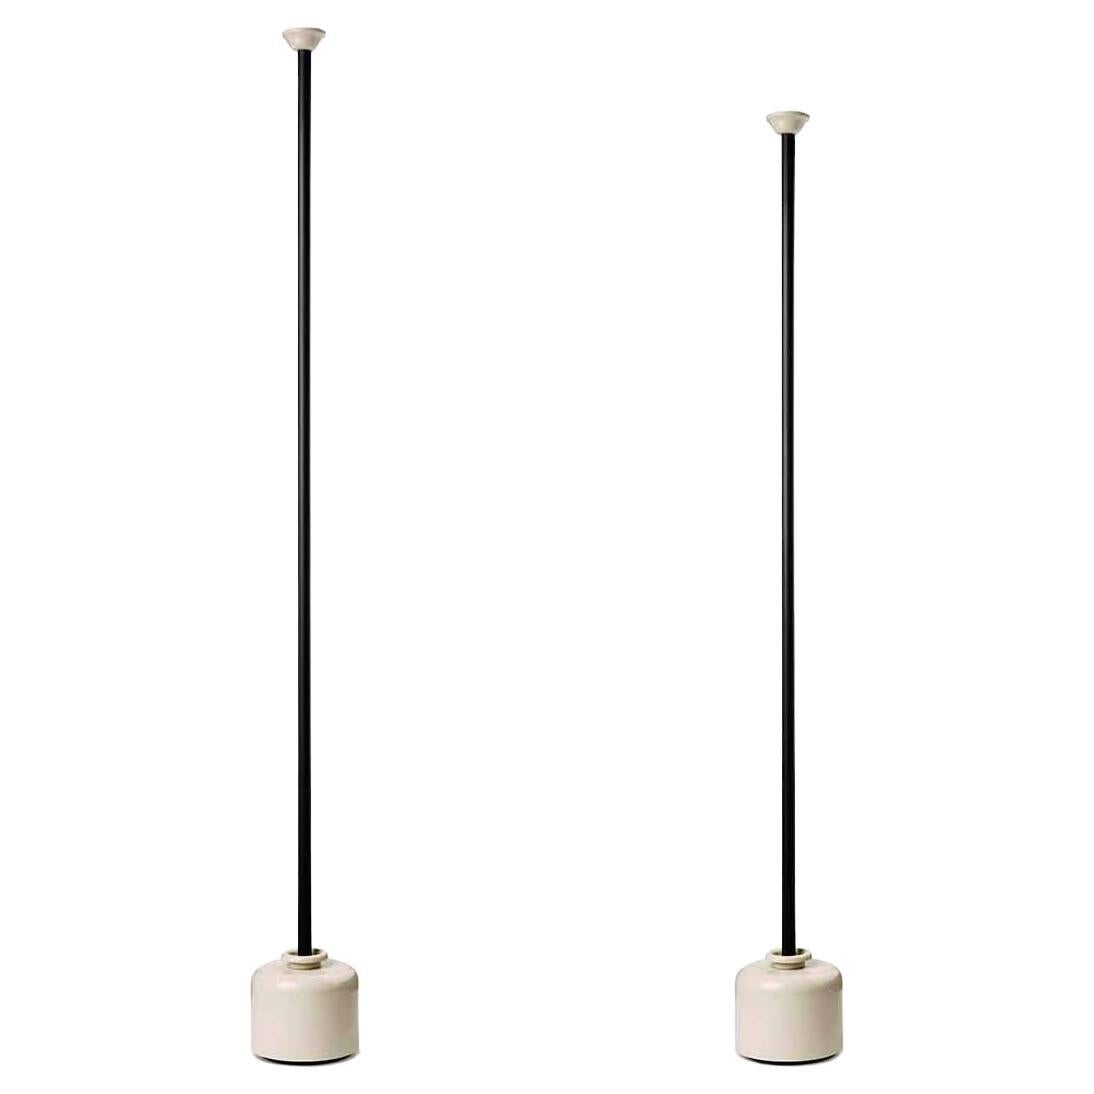 Set of 2 Gino Sarfatti Lamp Model 1095 "S-M" for Astep